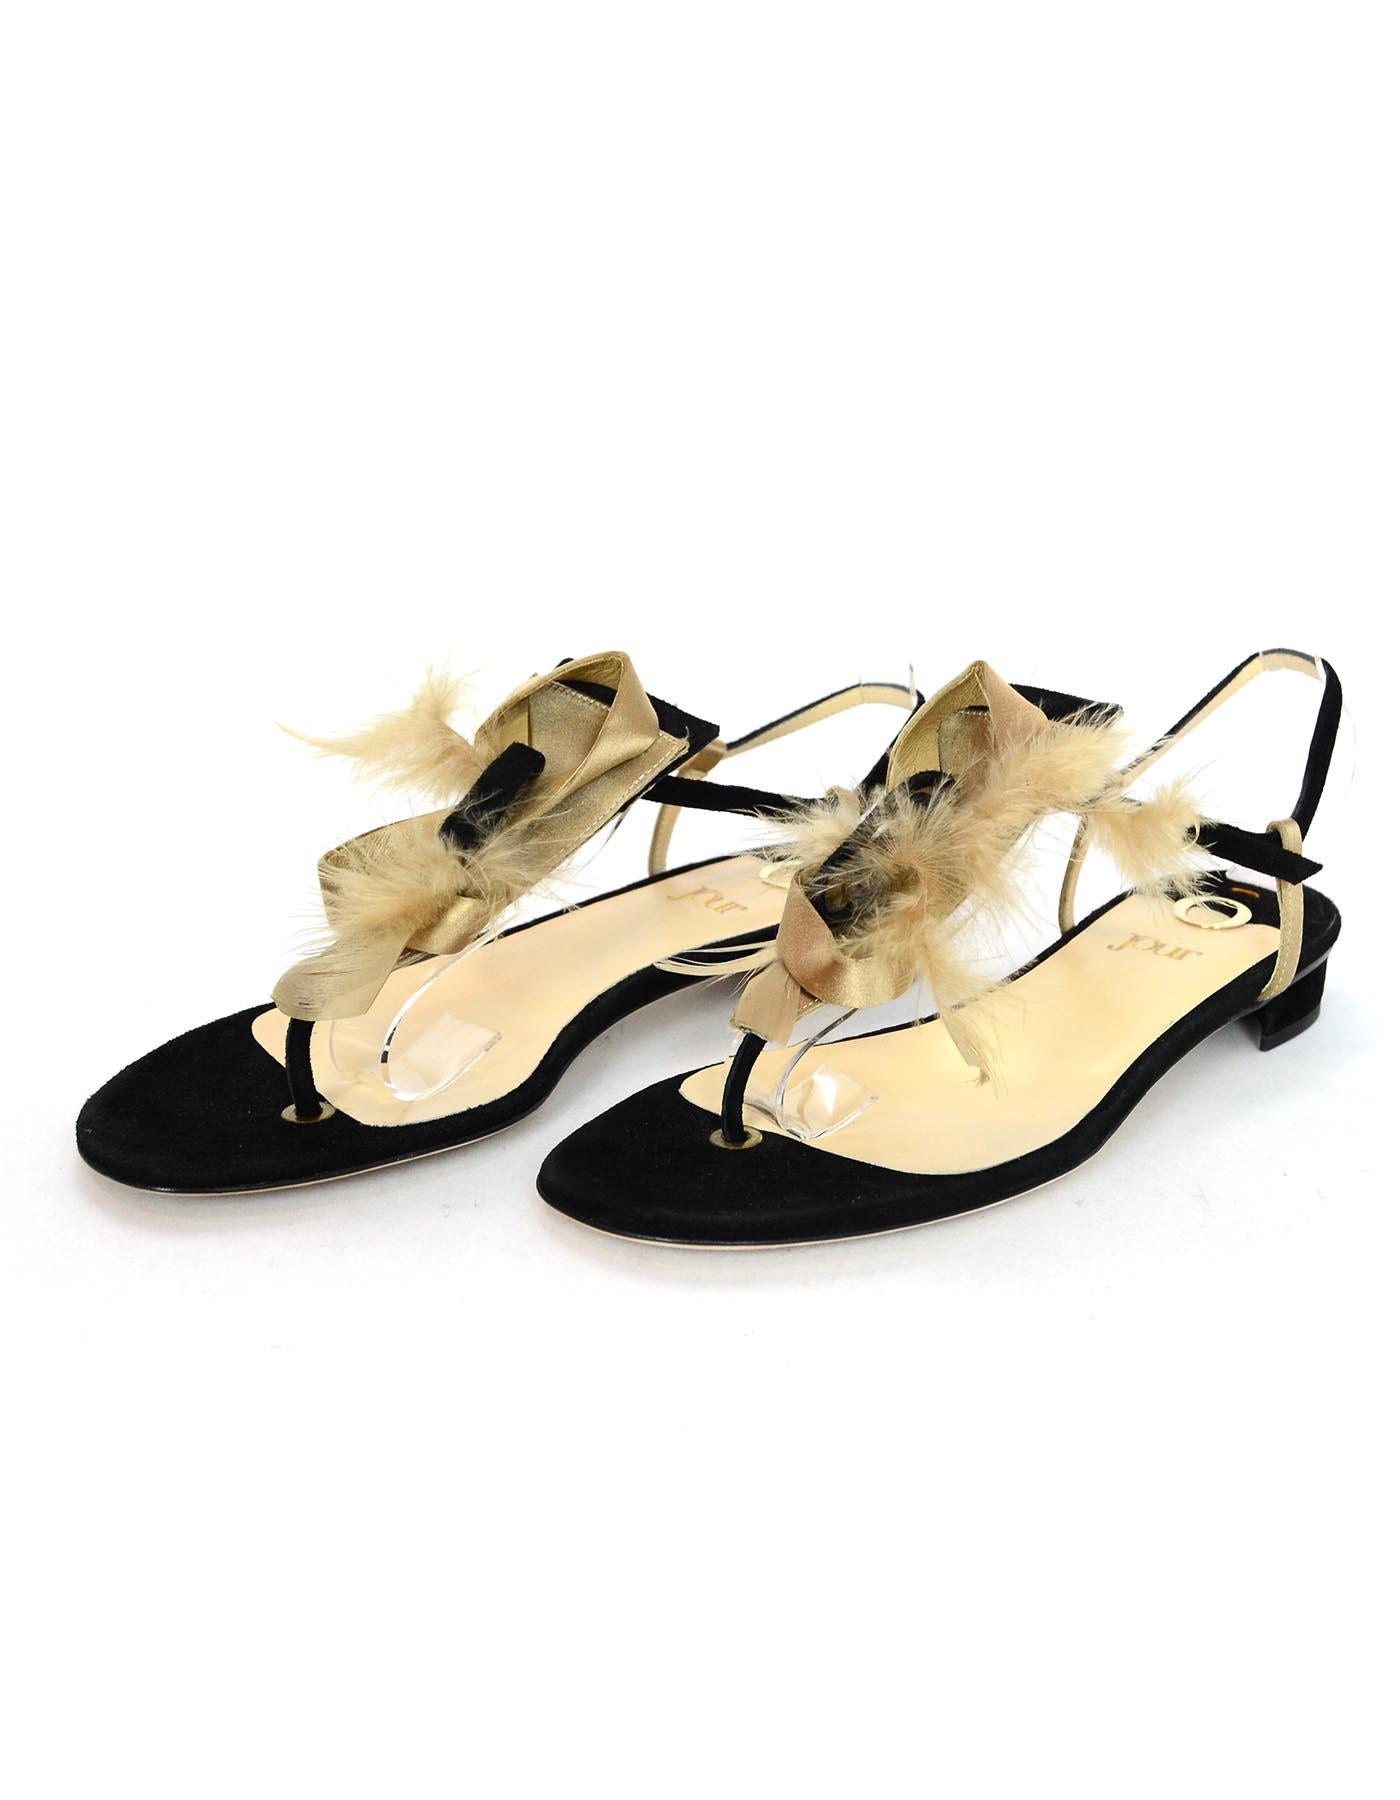 Beige Jour Black Suede Sandals W/ Feather Detail Sz 38 rt. $675